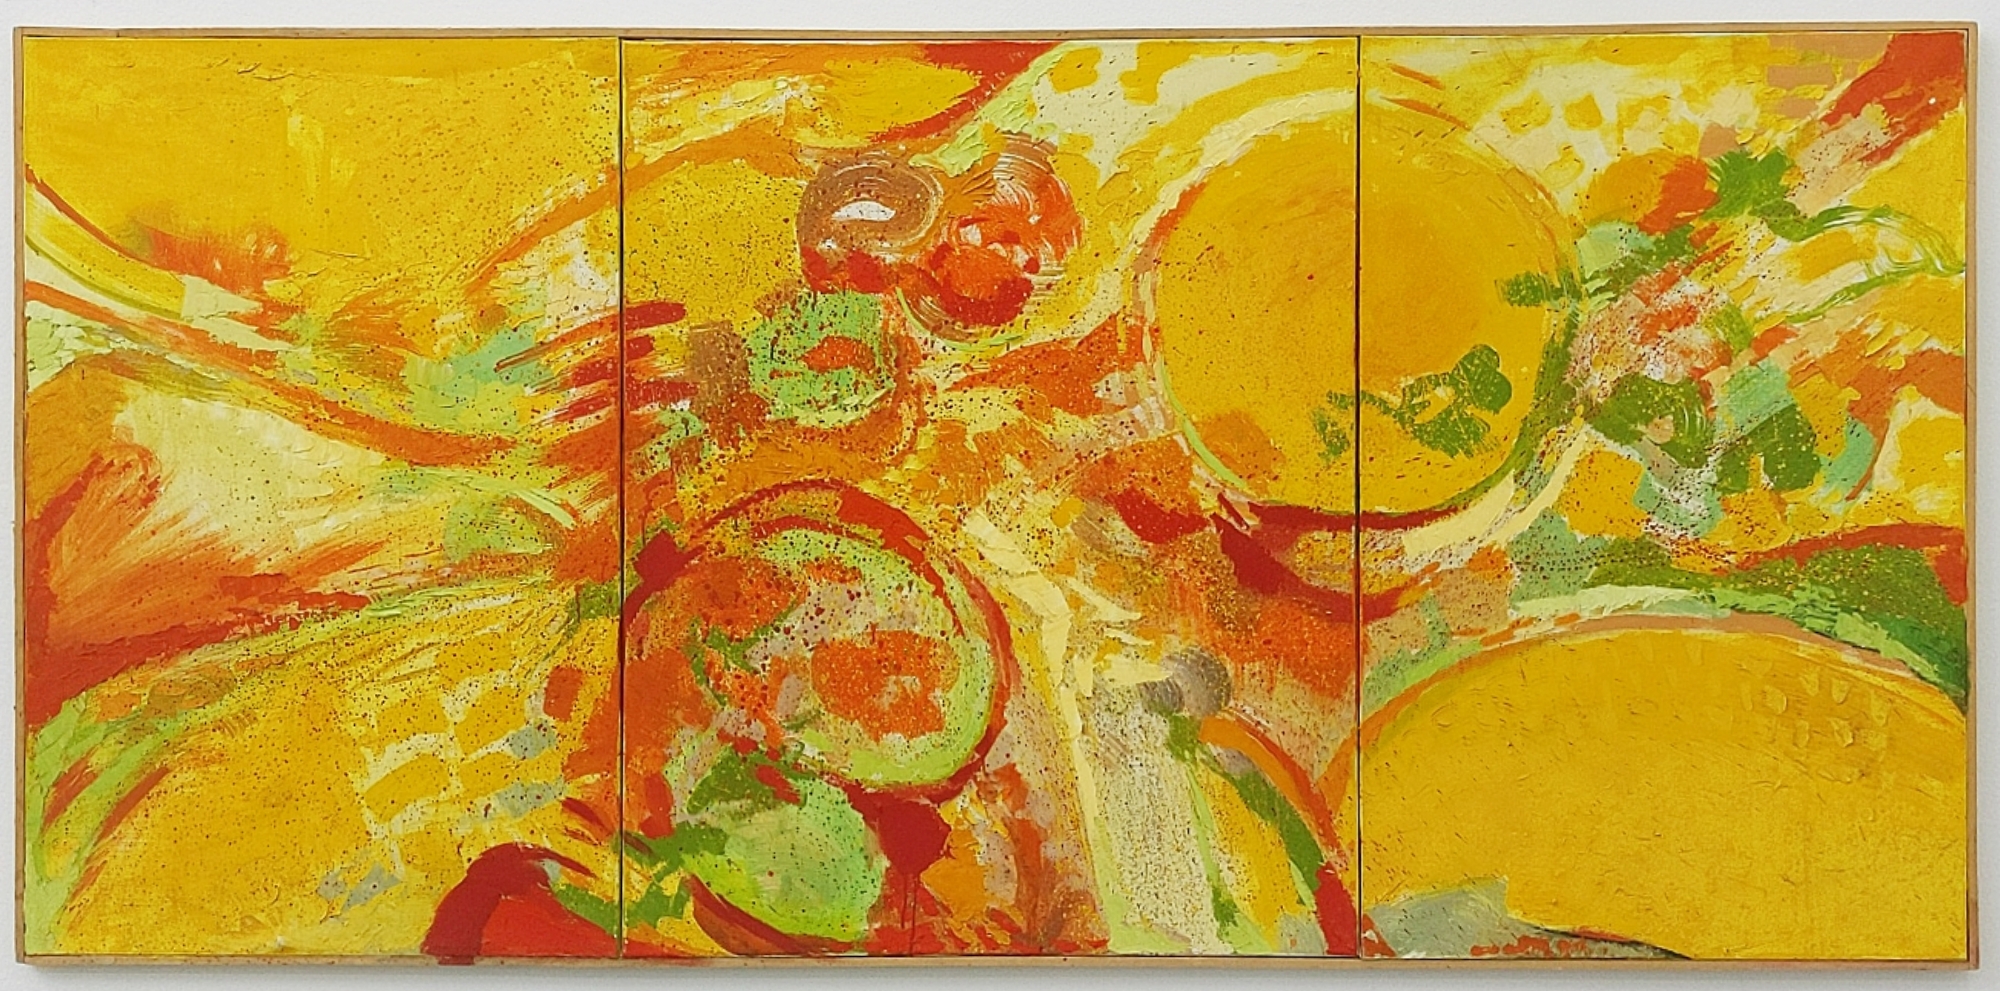 "Tryptique d‘automne" , 1968, oil on canvas, 213x103.